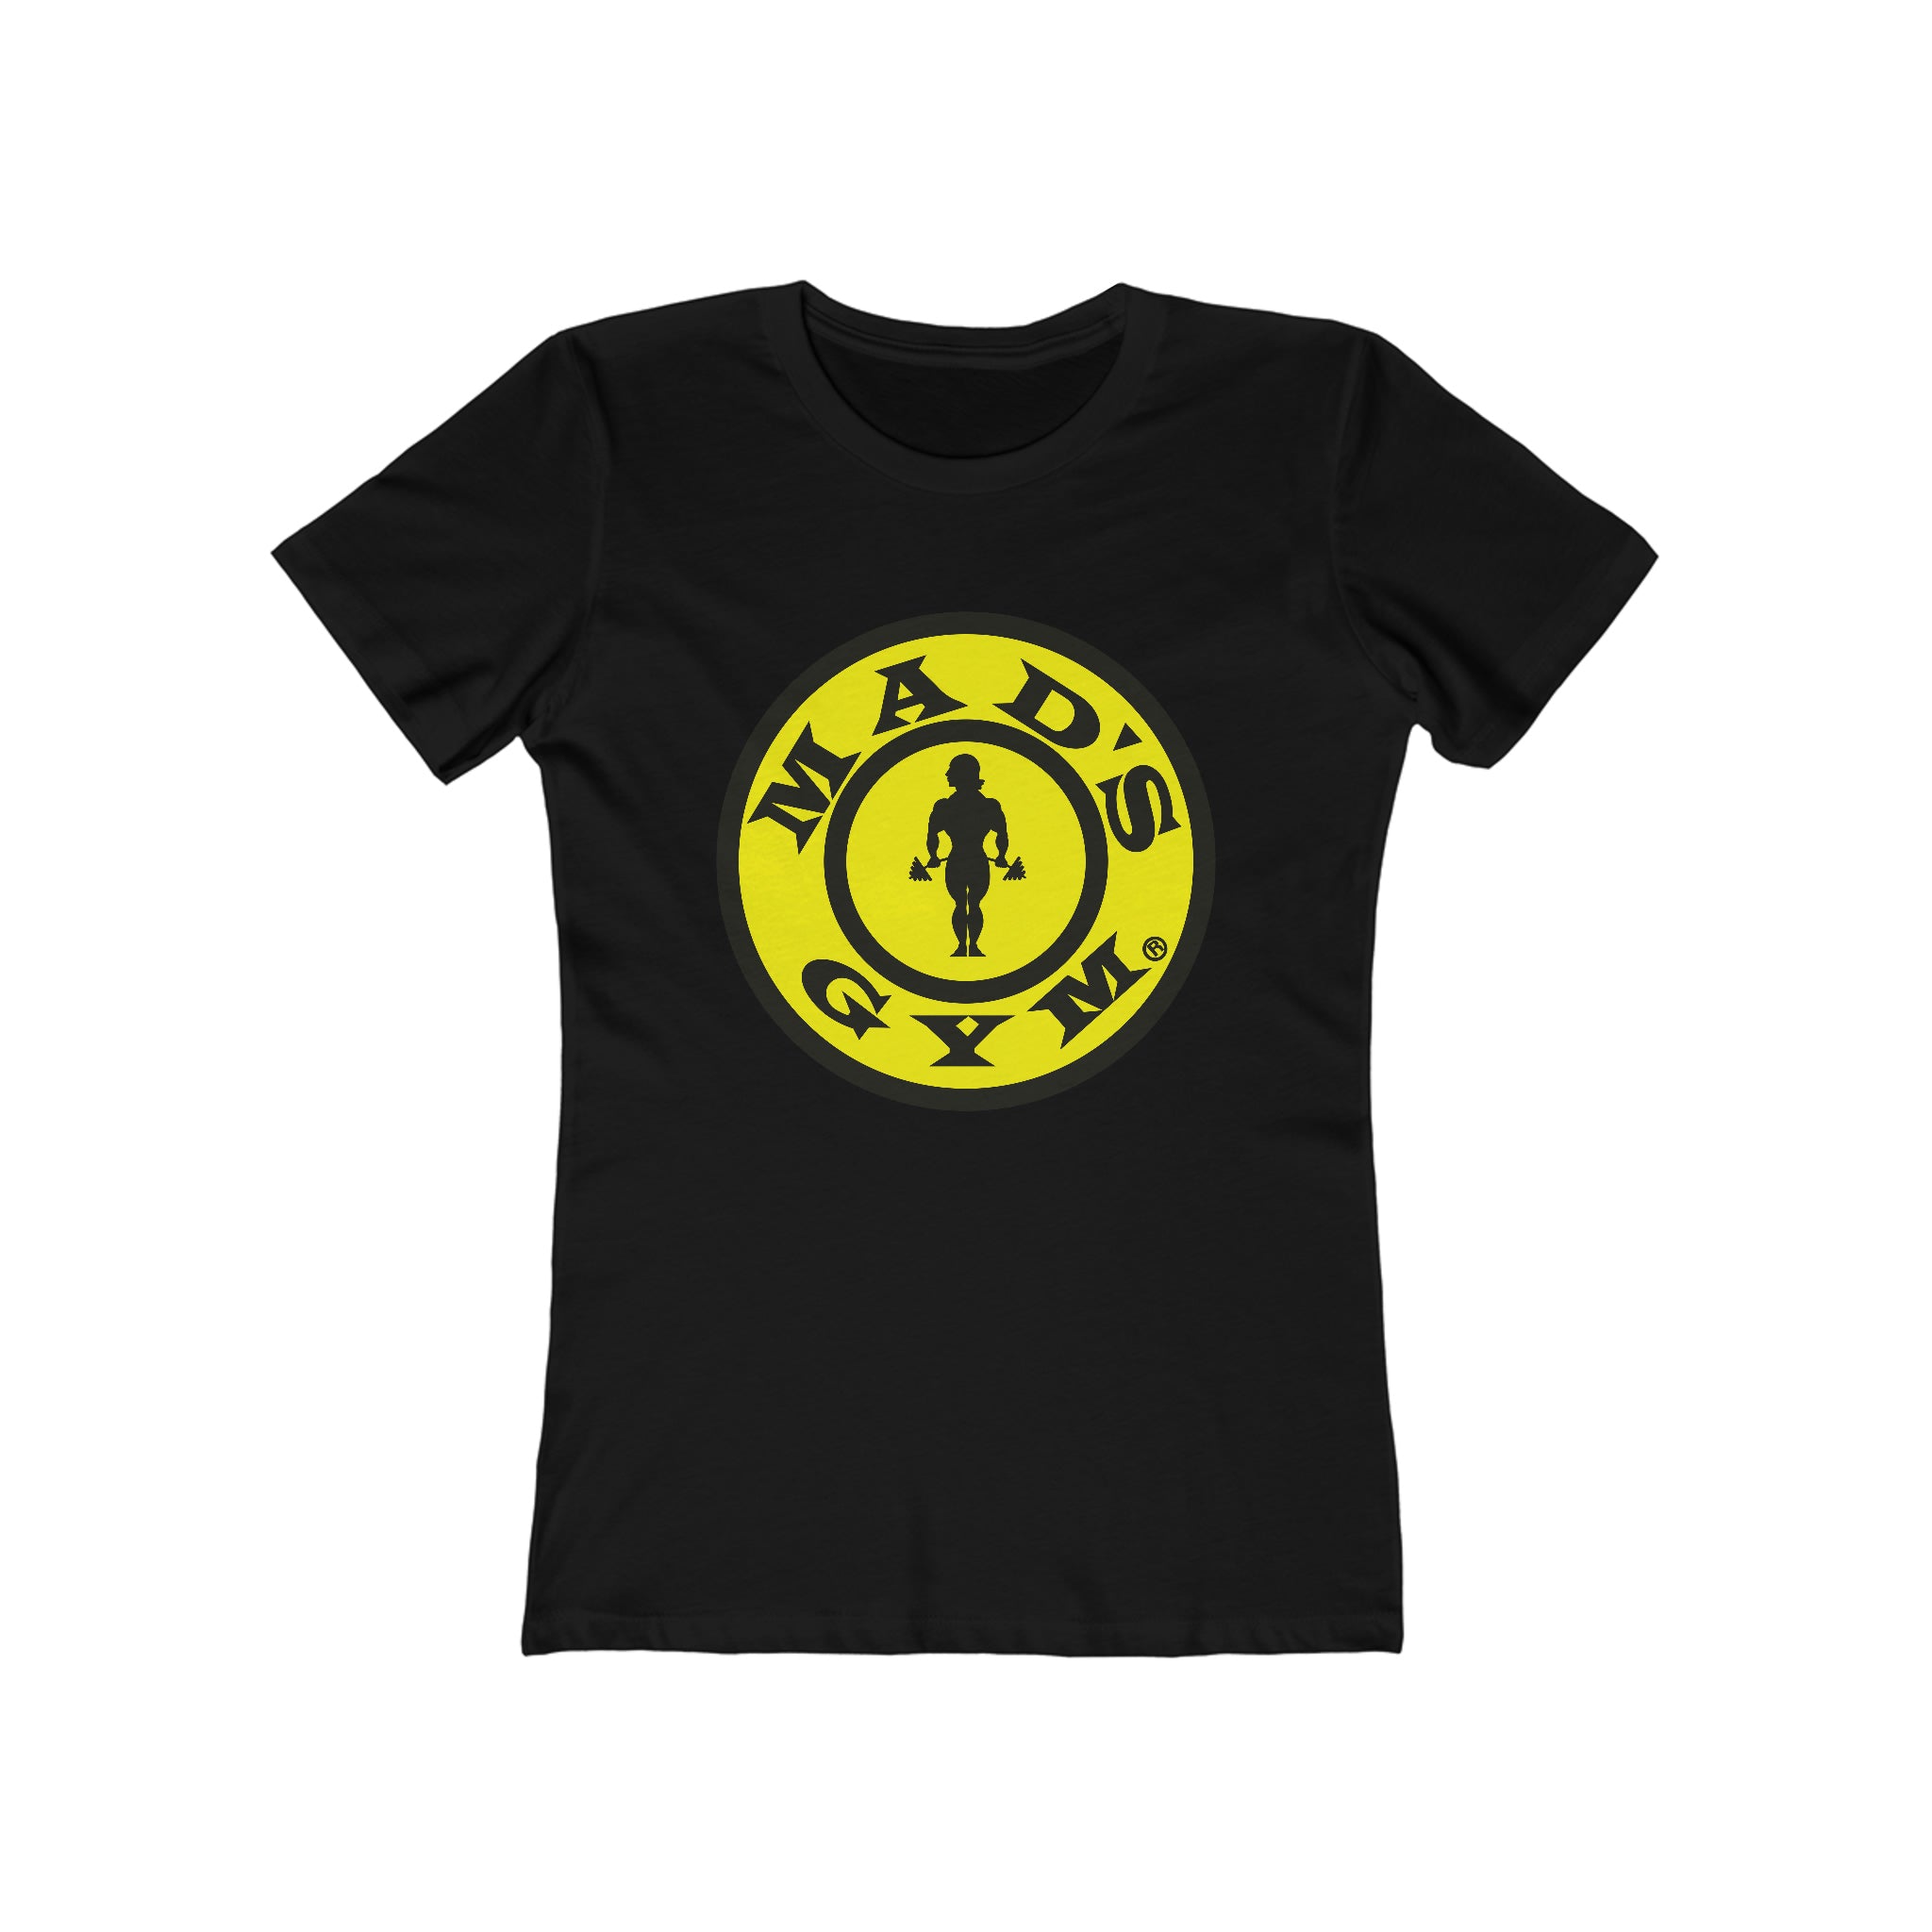 Mad's Gym Women's Shirt (Fed Soc)